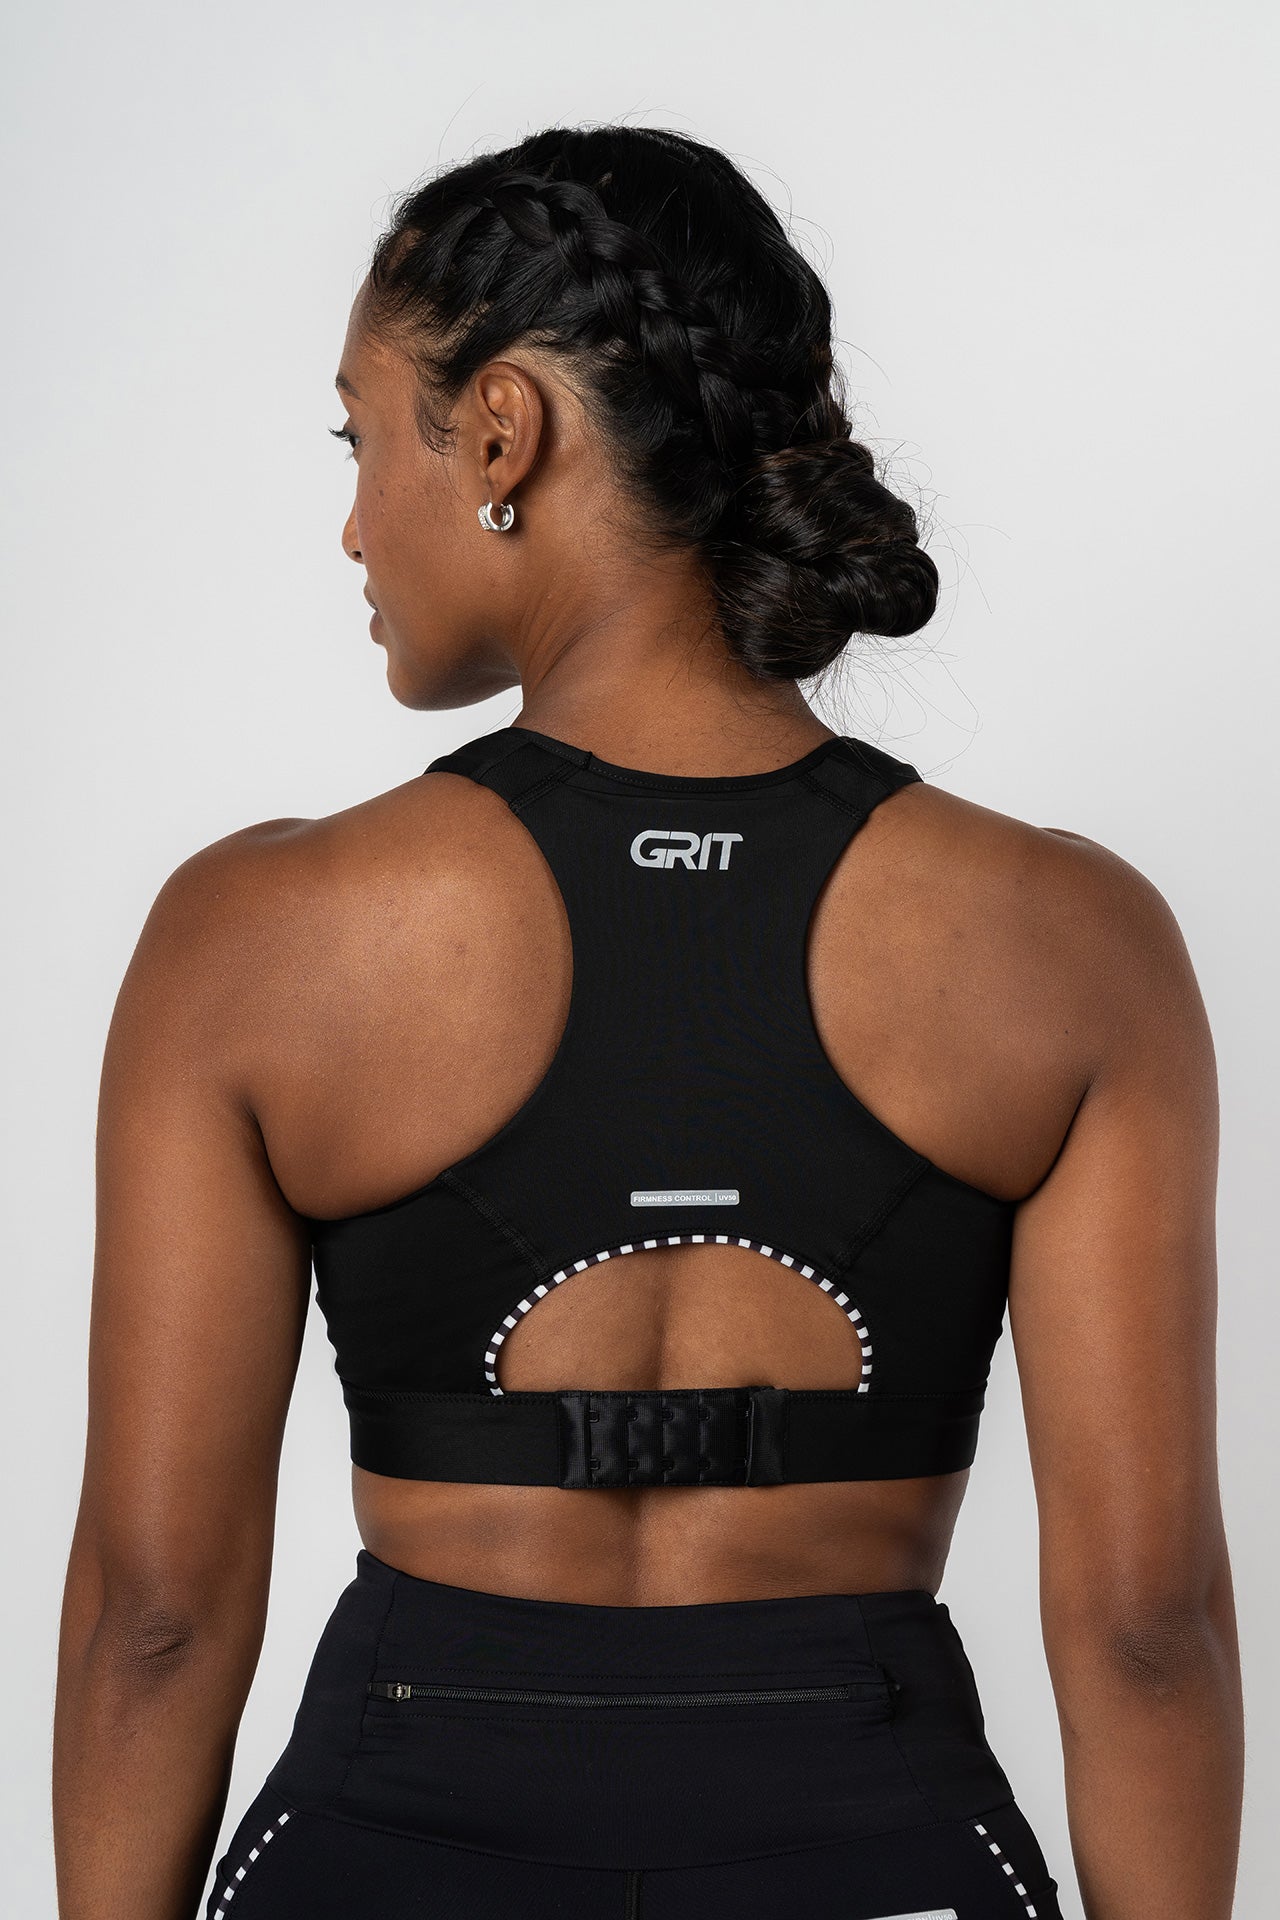 GRIT AND GRIND Women's Sports Bra - Black